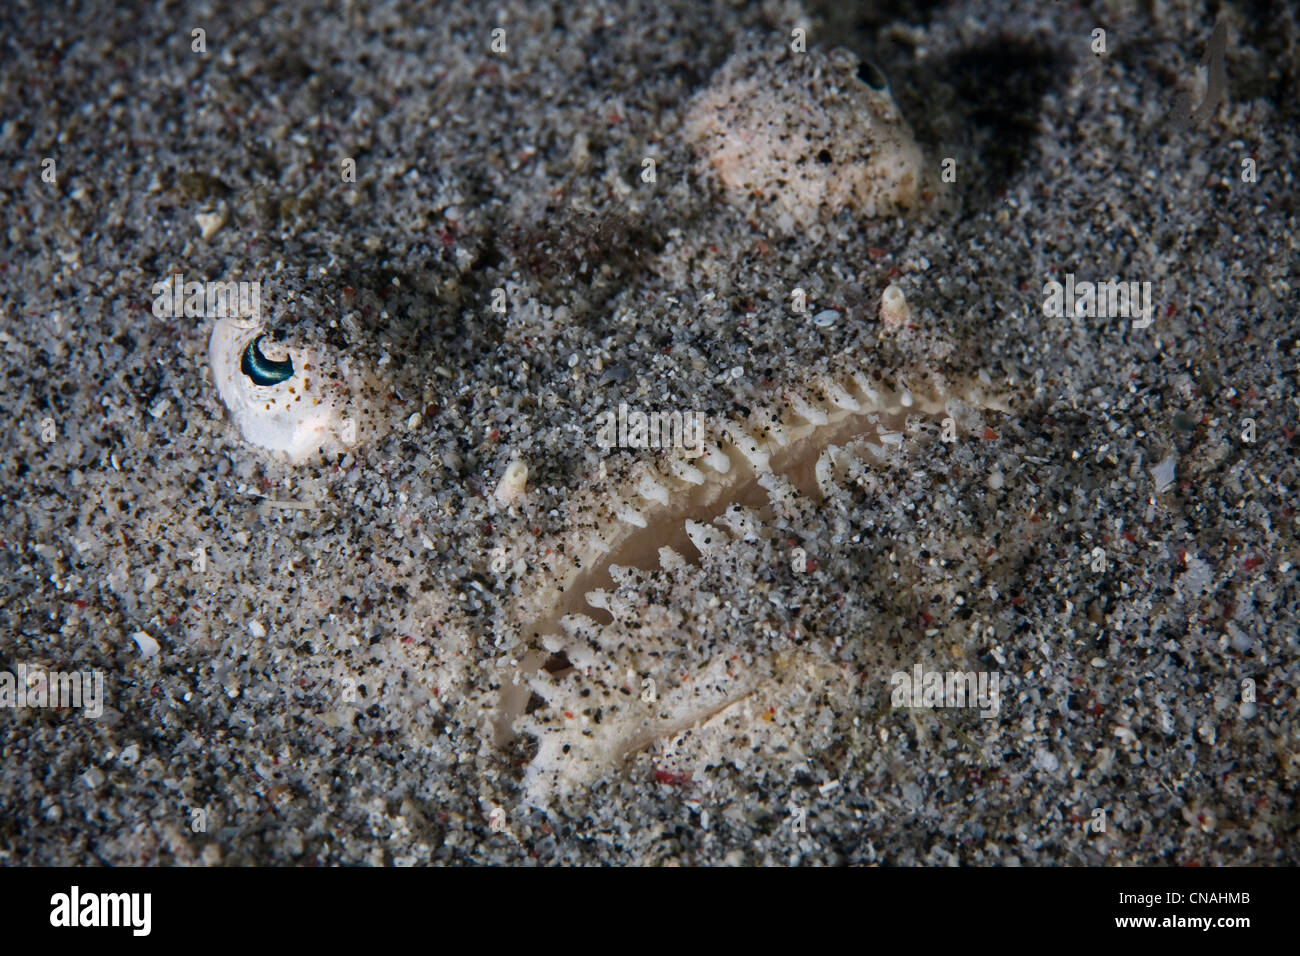 A Whitemargin stargazer, Uranoscopus sulphureus, camouflages itself under the sand while it waits for prey to swim close. Stock Photo